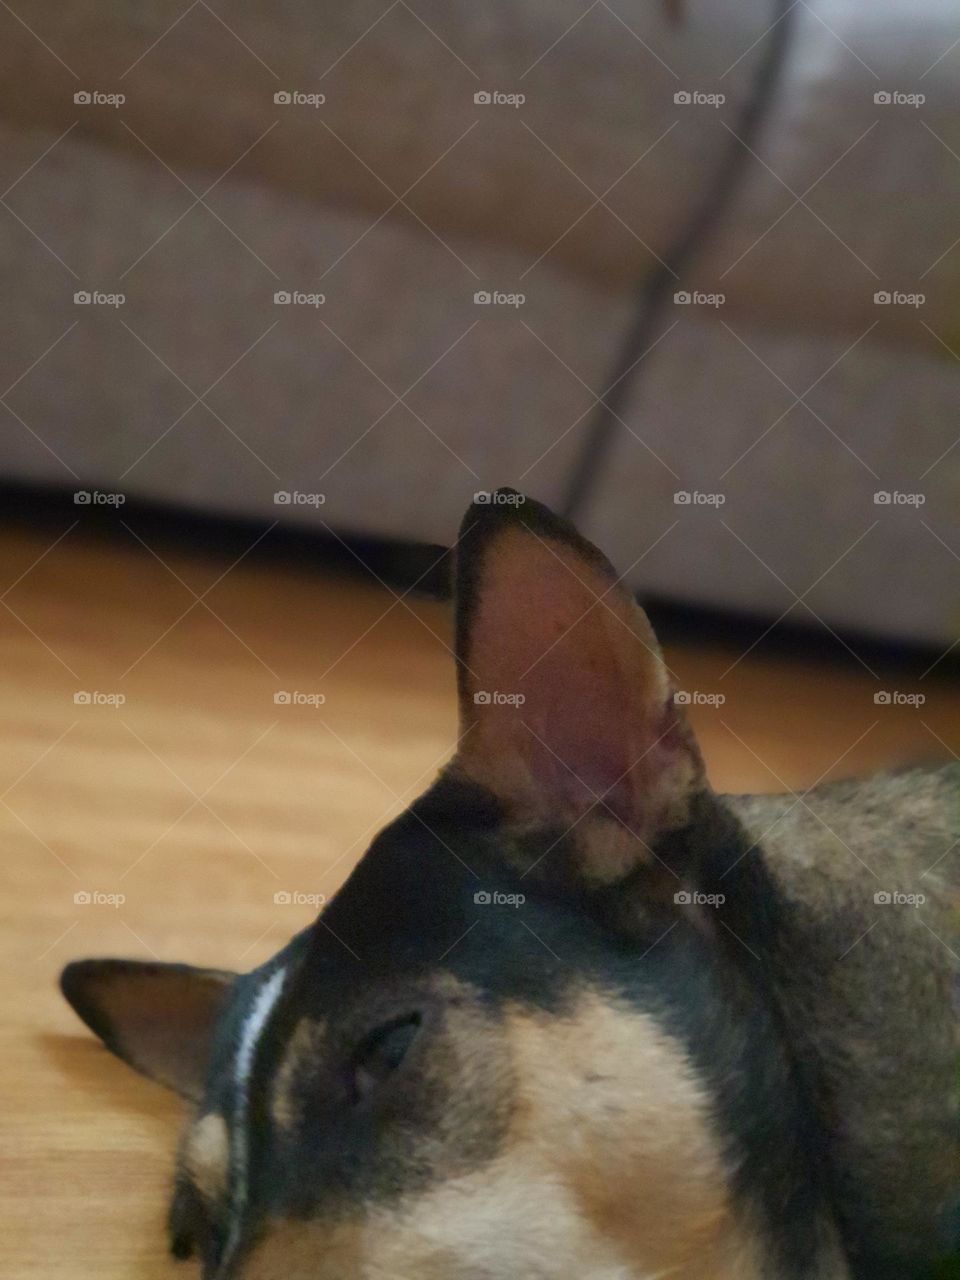 My dog's ear is triangular shape